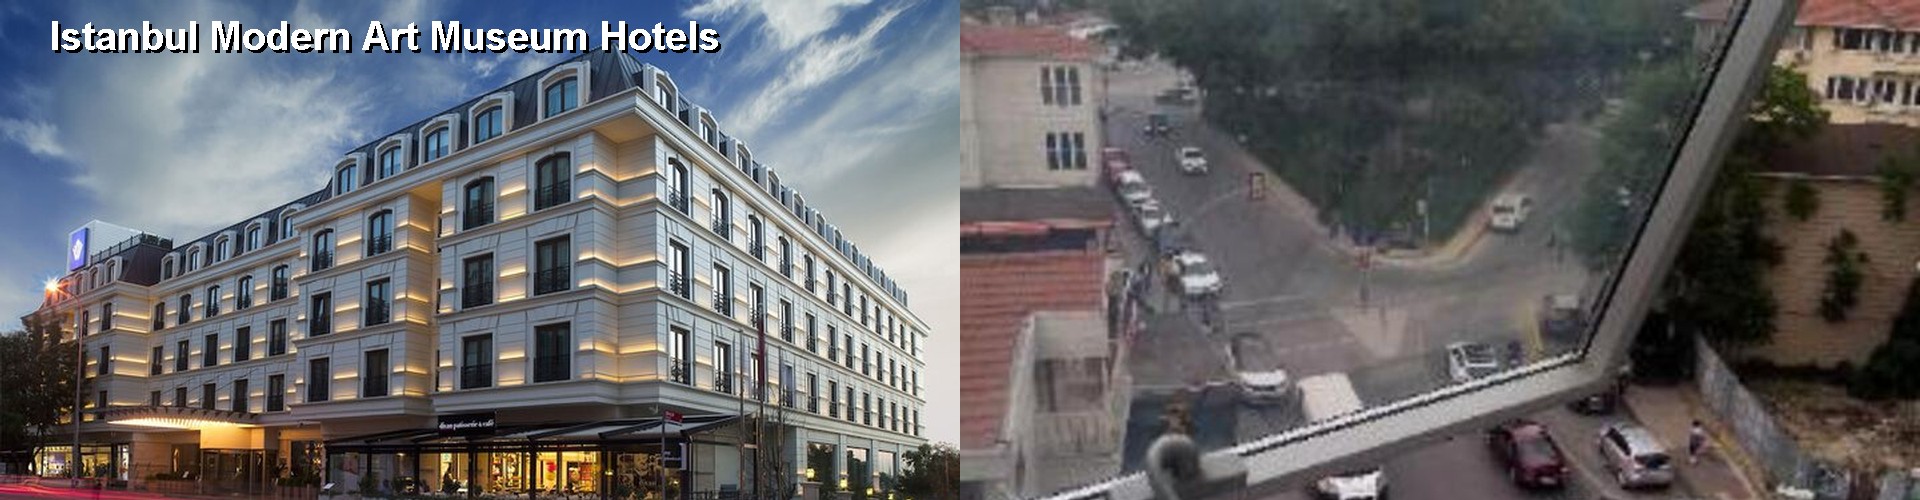 5 Best Hotels near Istanbul Modern Art Museum